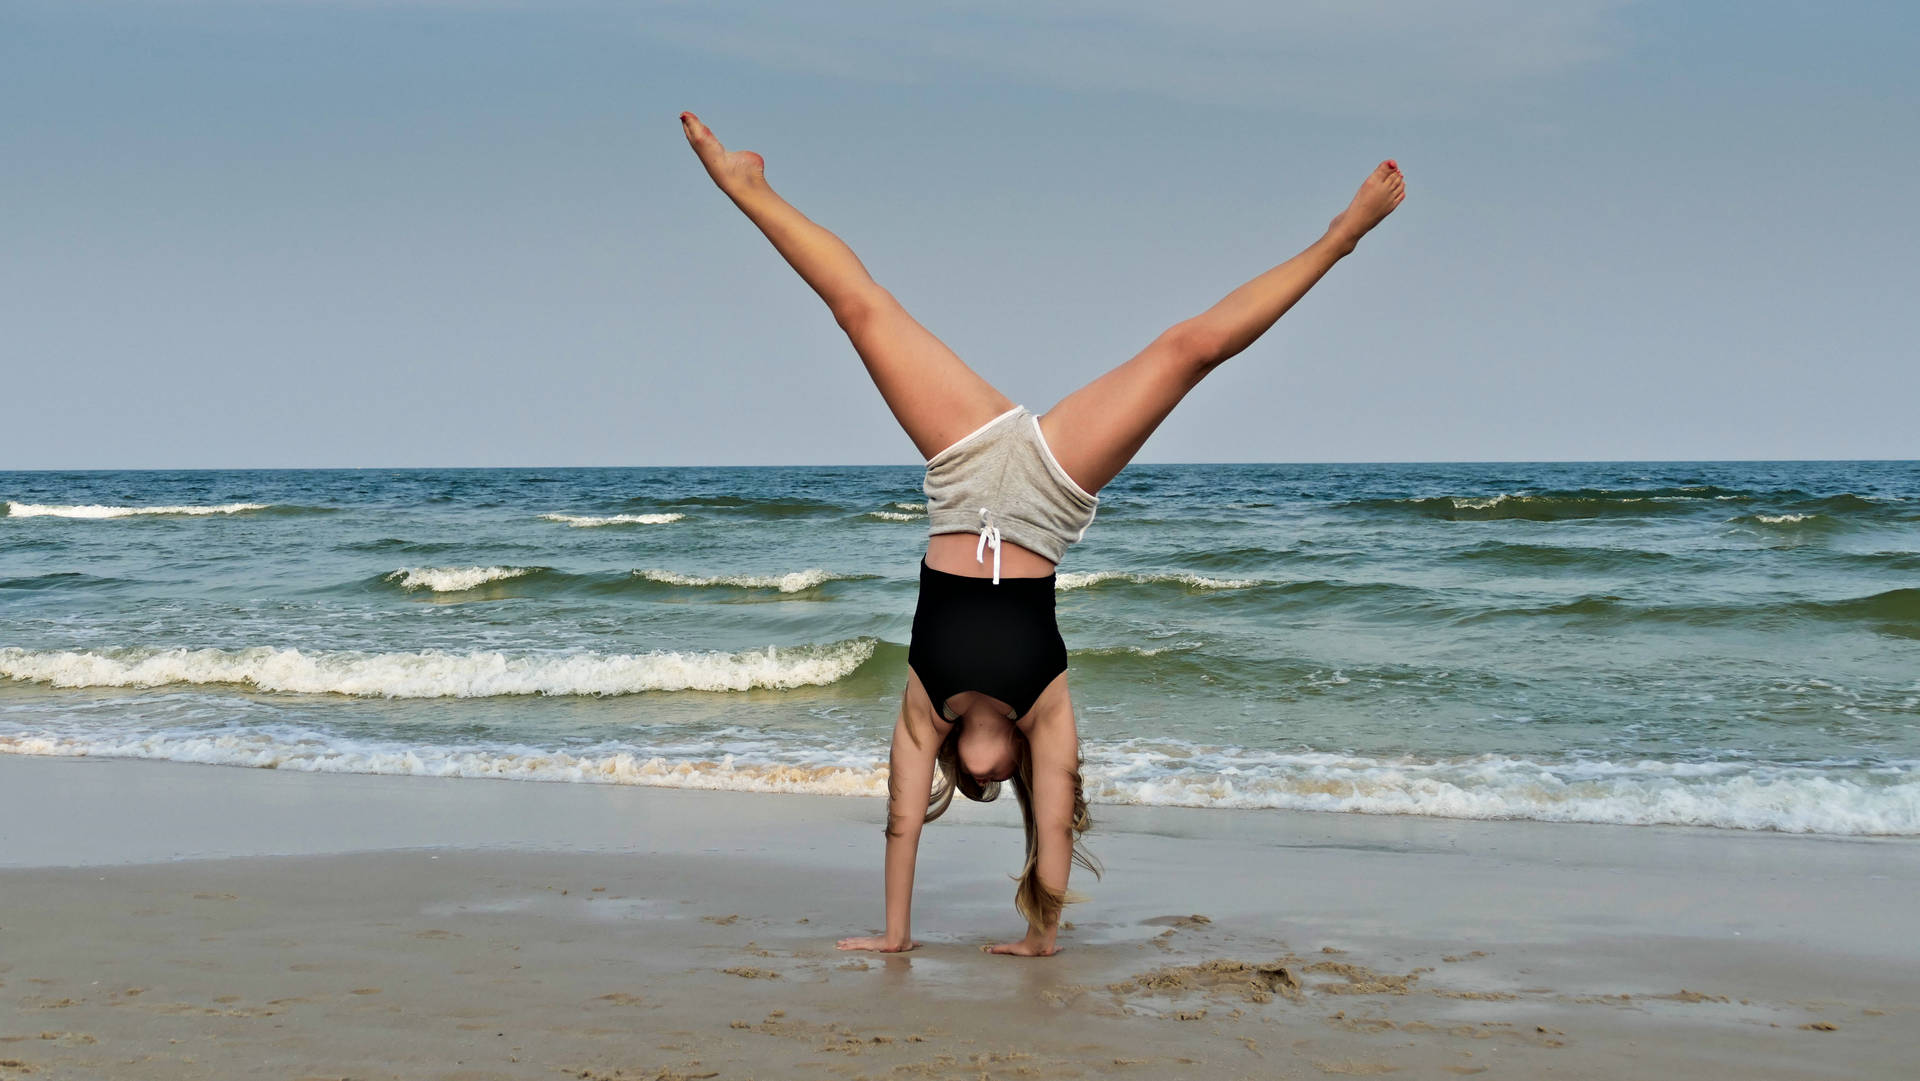 Gymnastics Handstand At Seashore